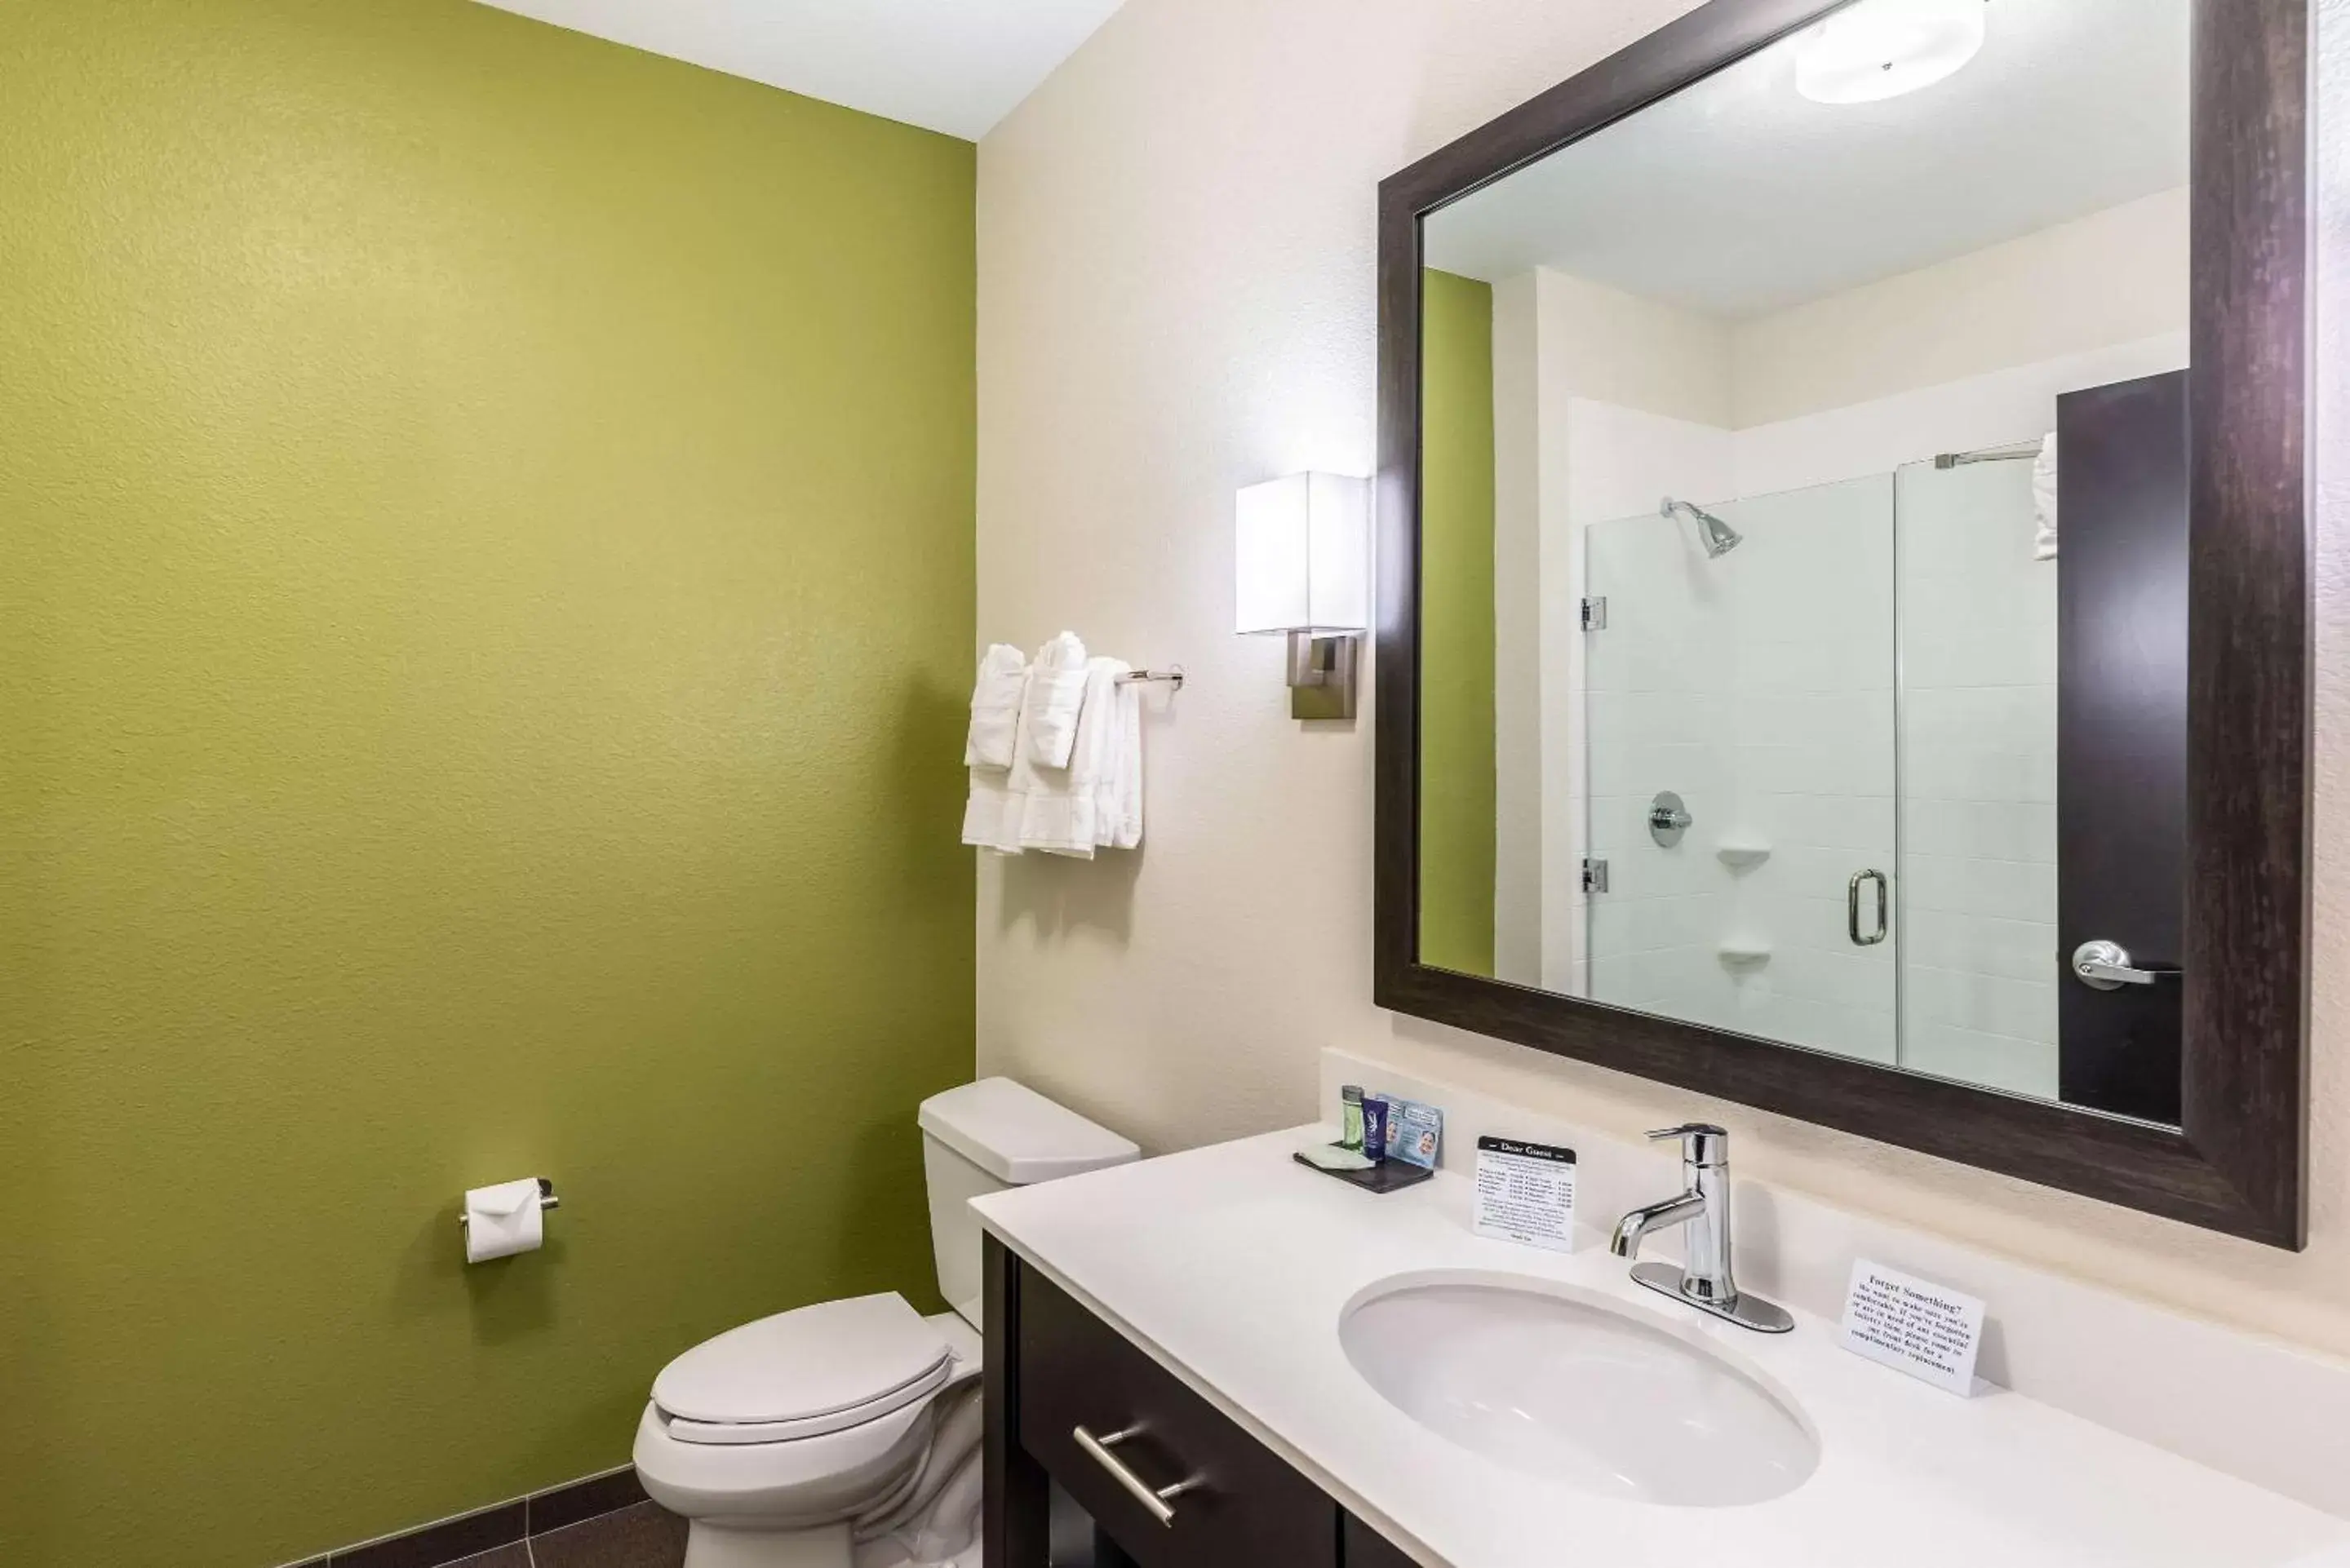 Photo of the whole room, Bathroom in Sleep Inn & Suites Fort Worth - Fossil Creek